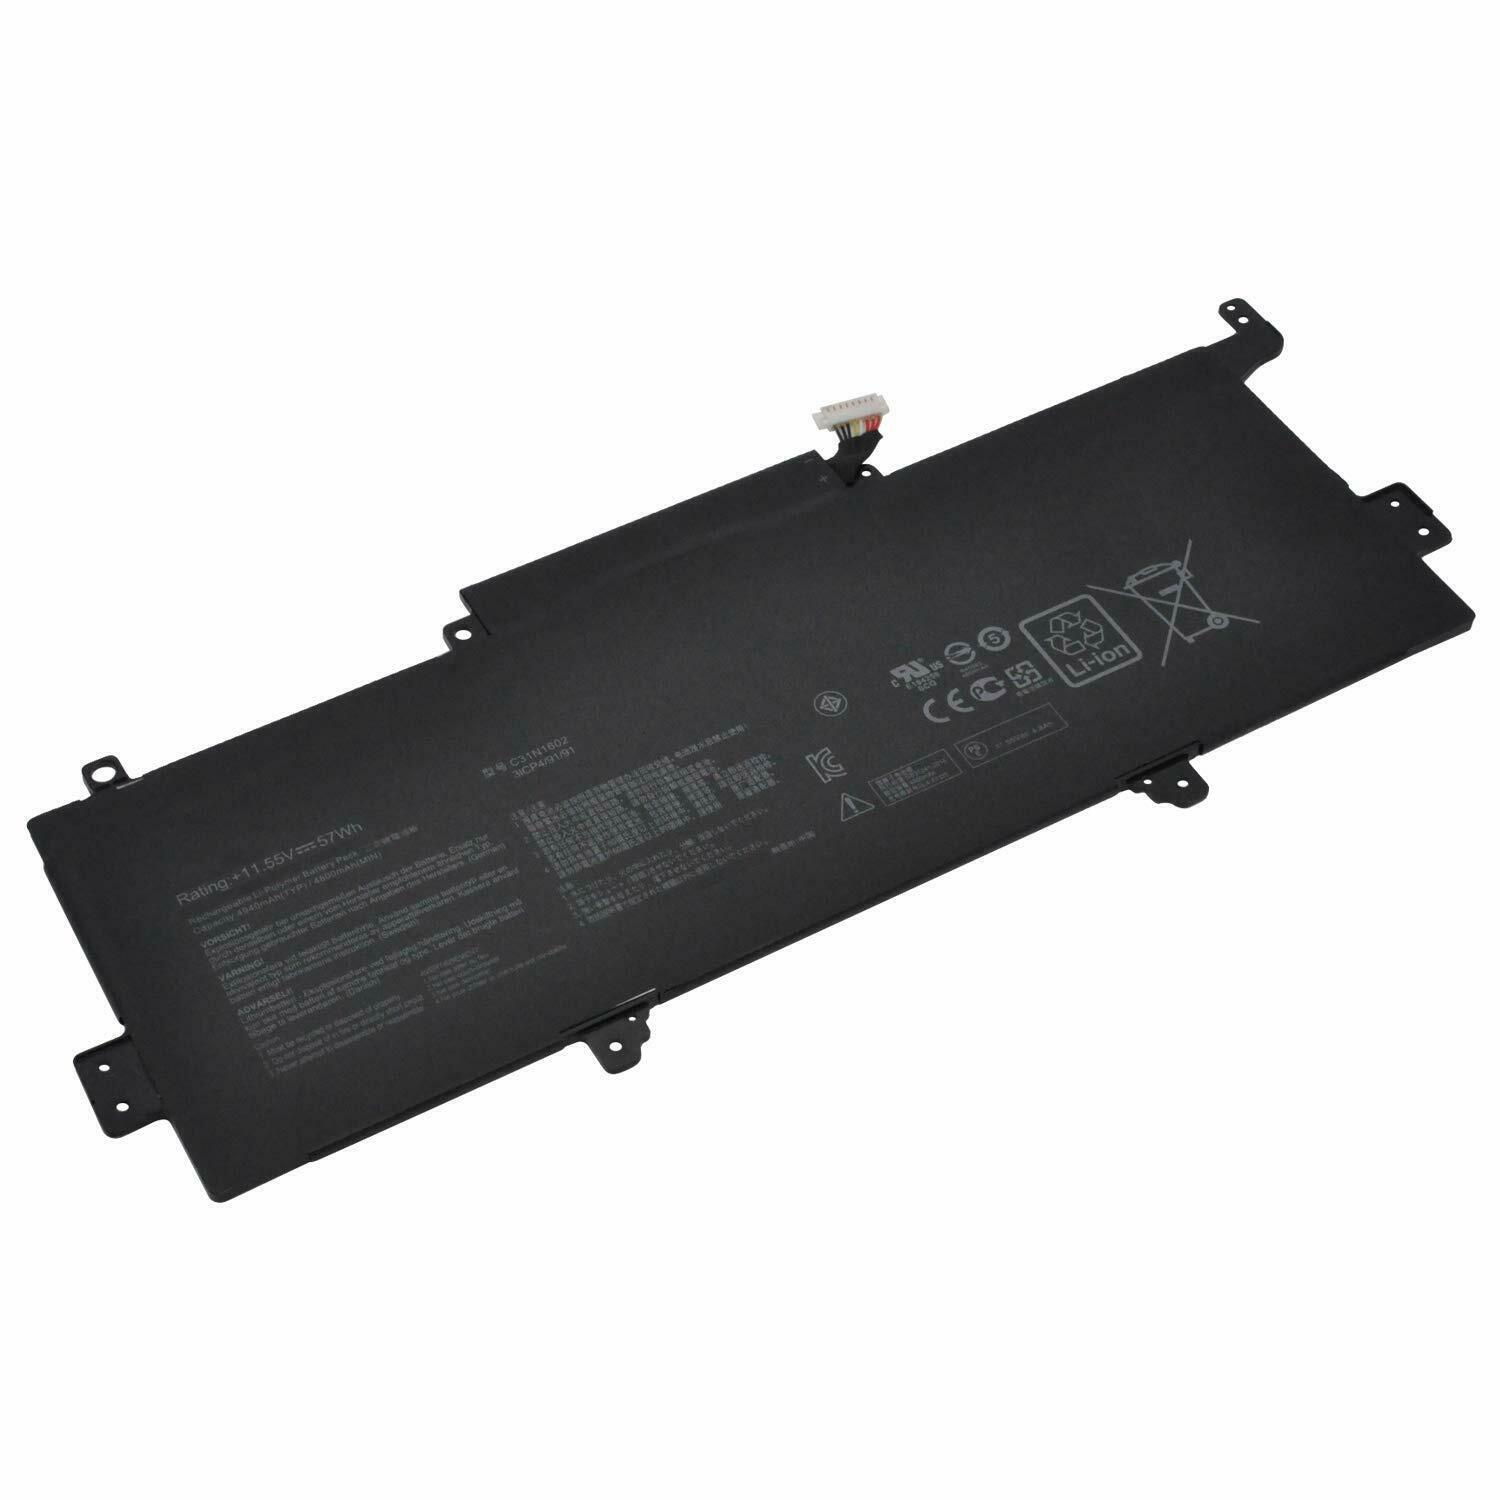 C31N1602 ASUS Zenbook U3000U UX330U UX330UA 0B200-02090000 kompatibelt batterier